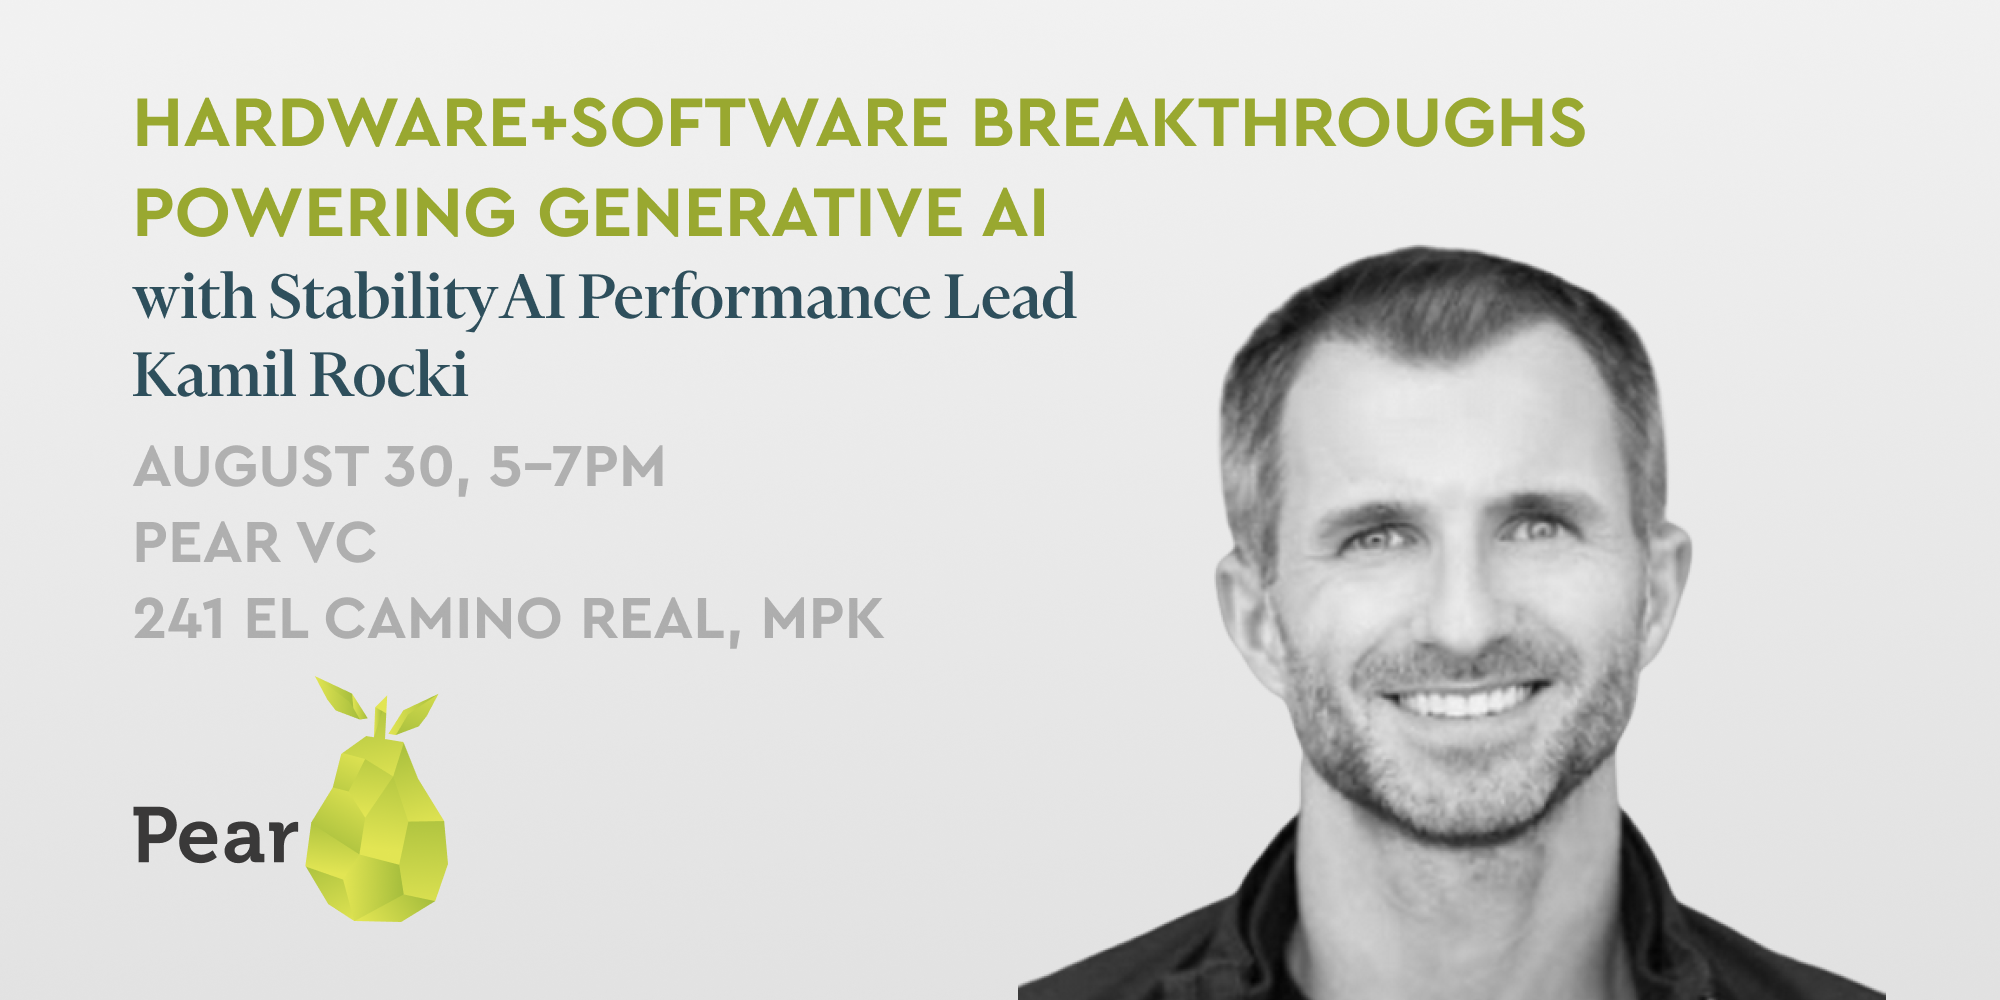 event Hardware+Software breakthroughs powering Generative AI with StabilityAI Performance Lead Kamil Rocki